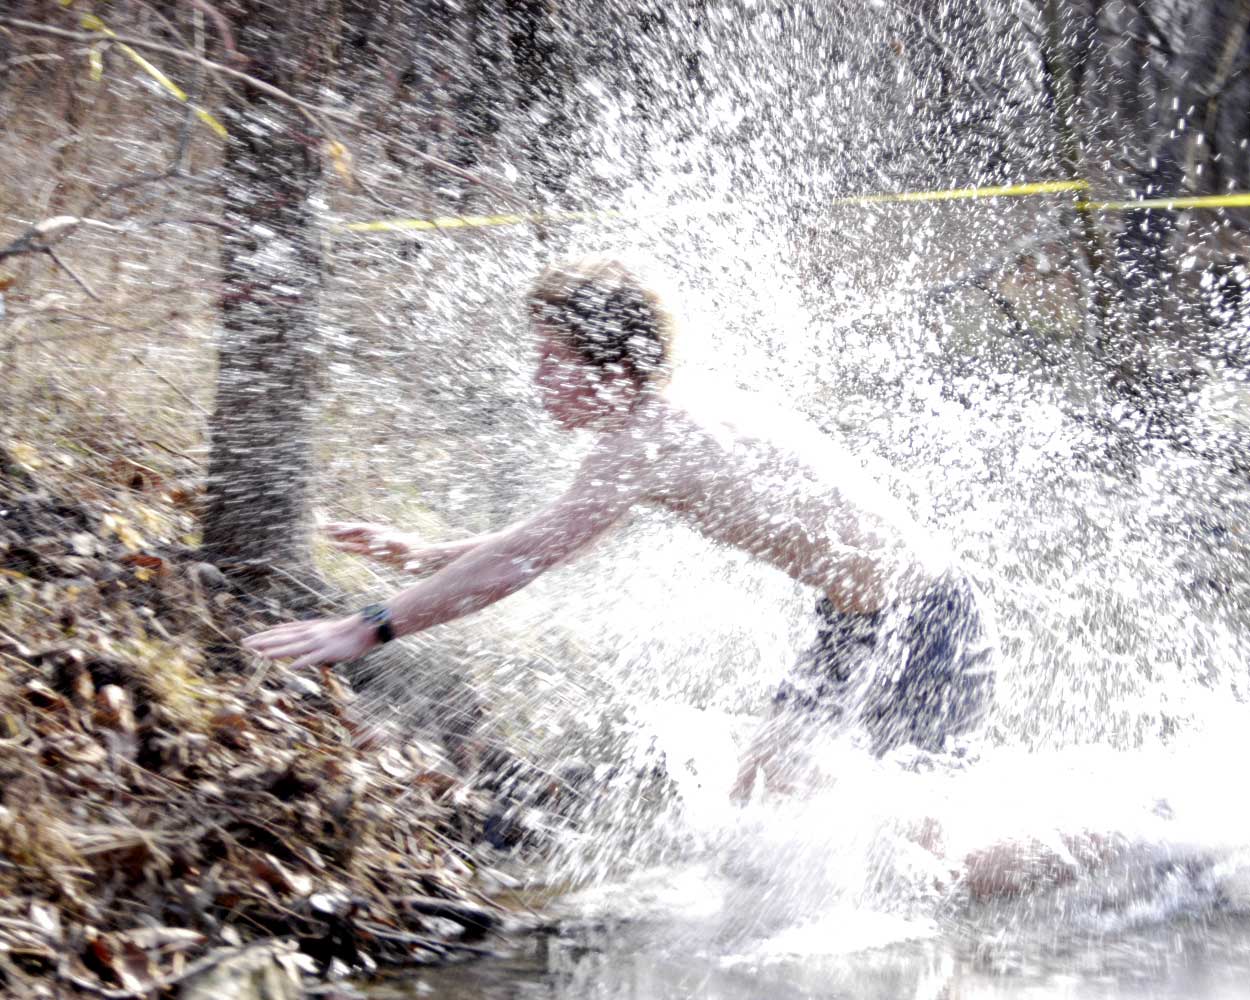 Matt Riley making a splash at the creek crossing